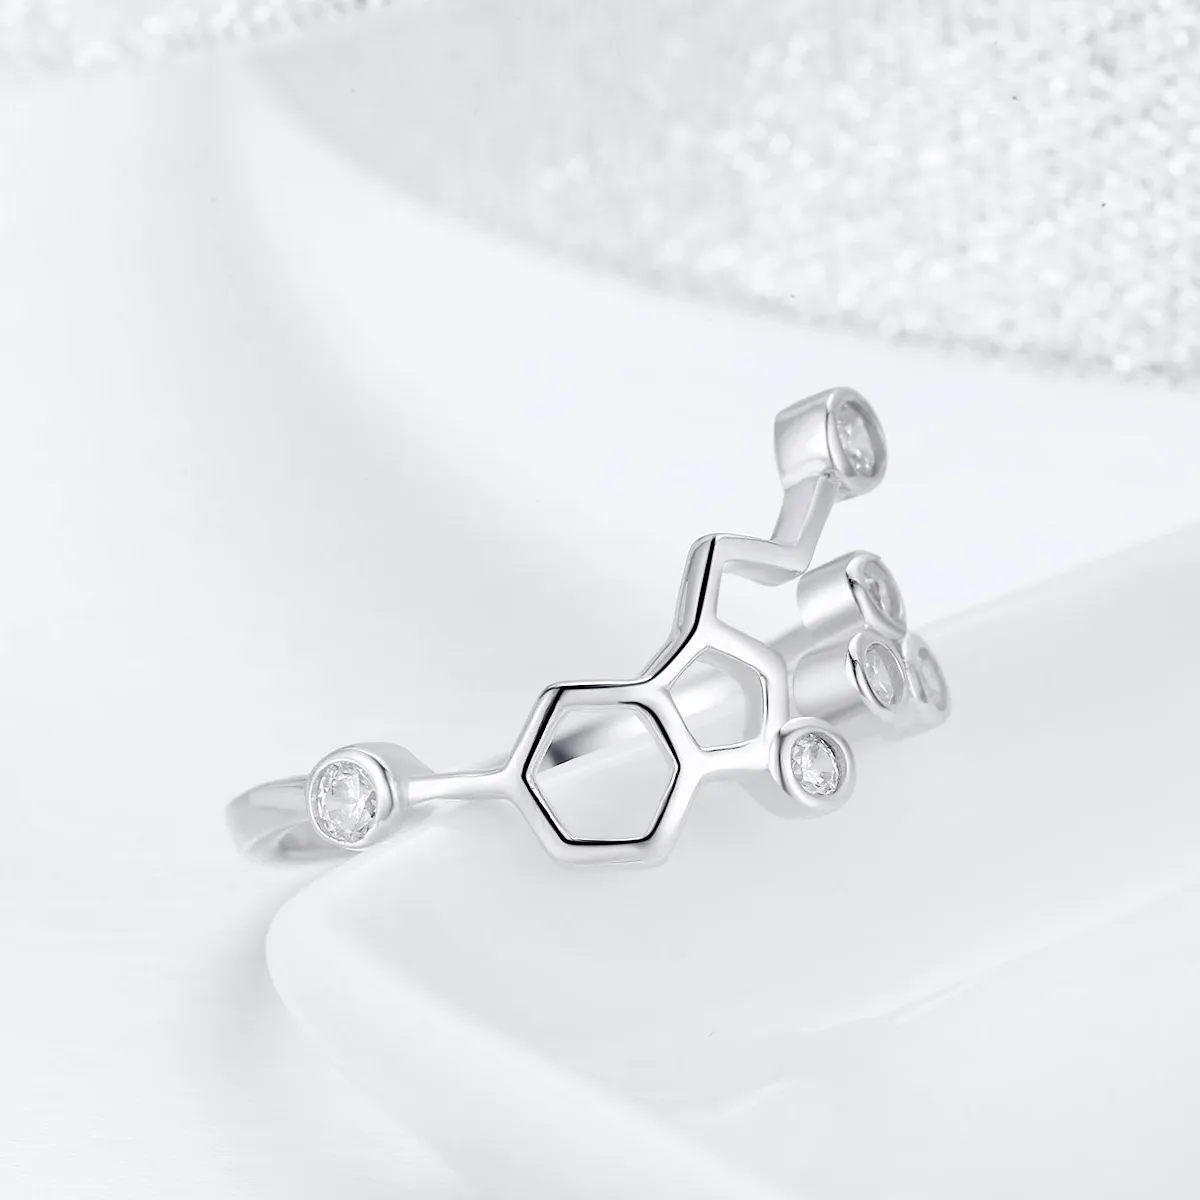 Pandora Style Silver Honeycomb Ring - SCR433